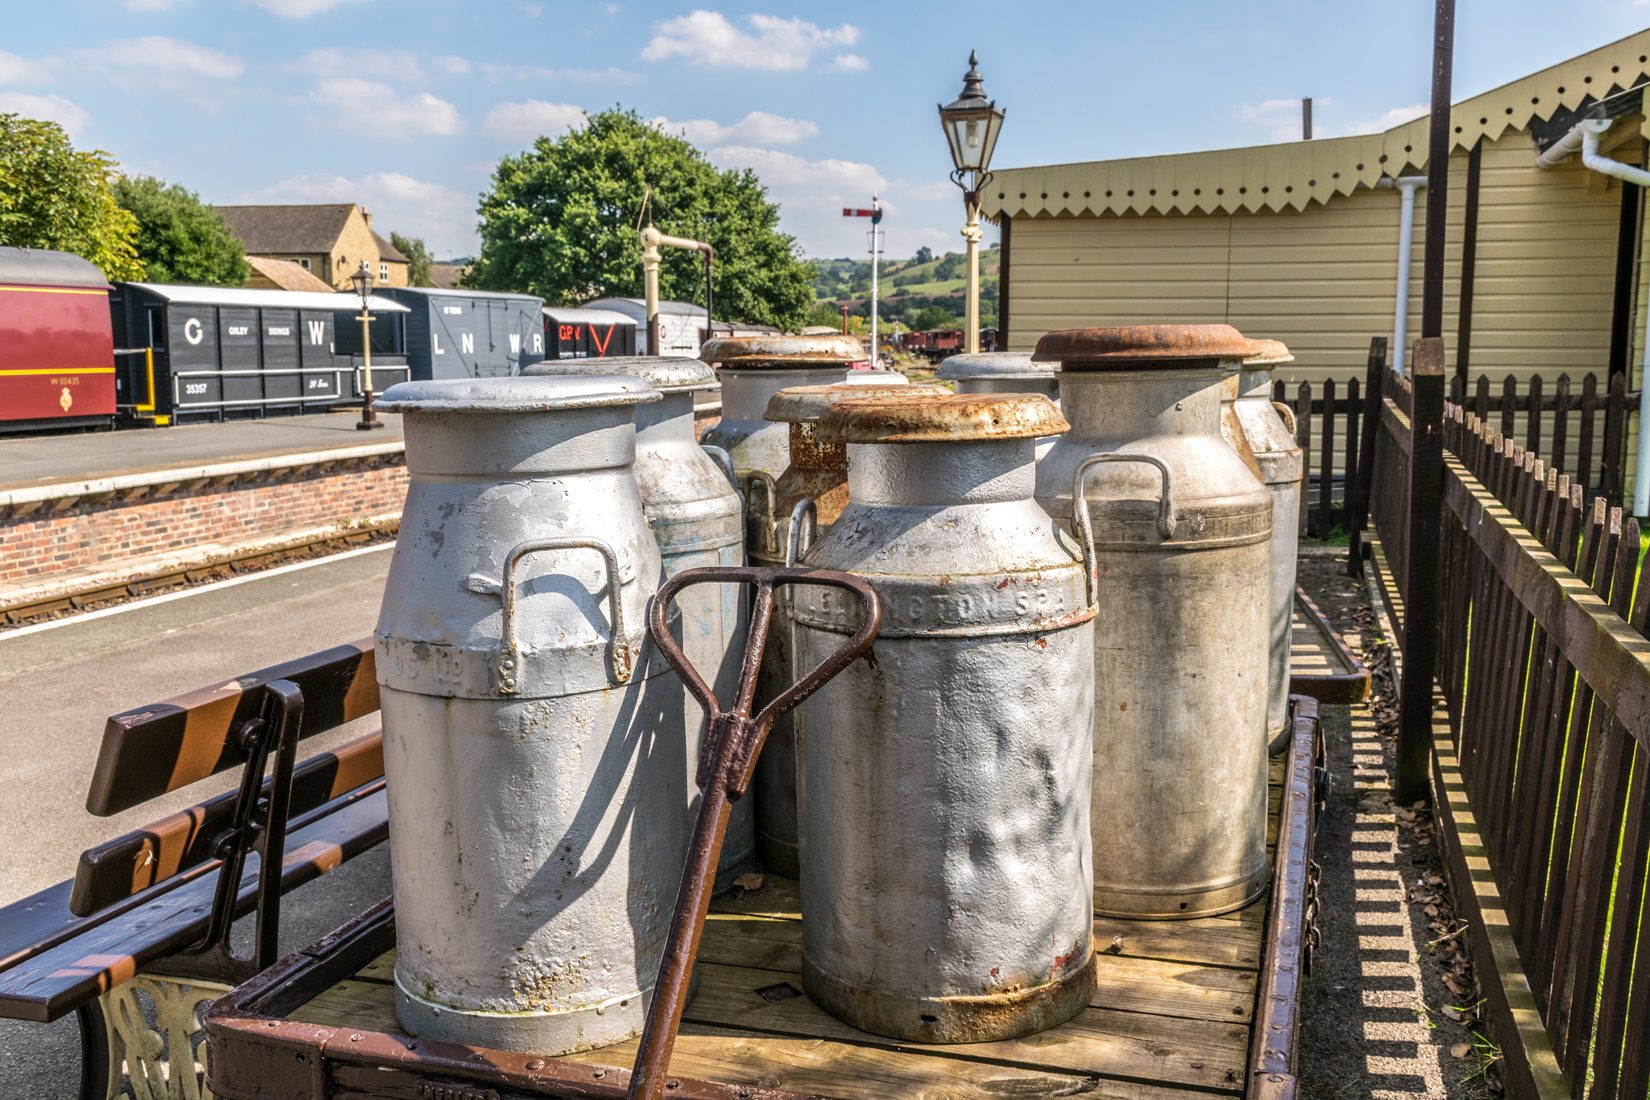 Restored milk churns on display at Winchcombe